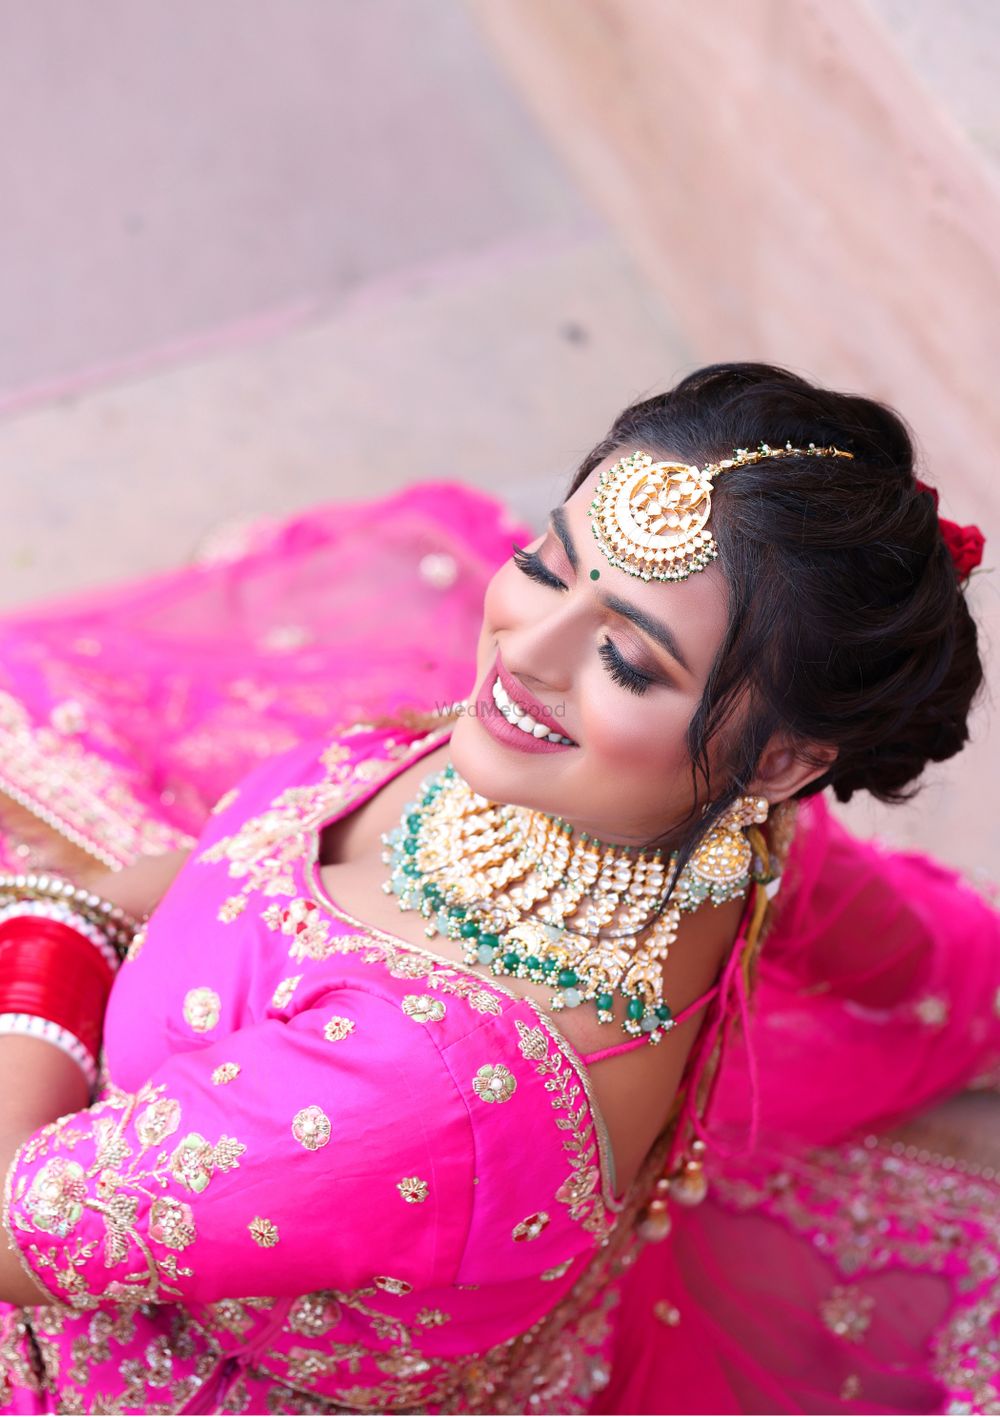 Photo By Makeup by Nishi Sharma - Bridal Makeup